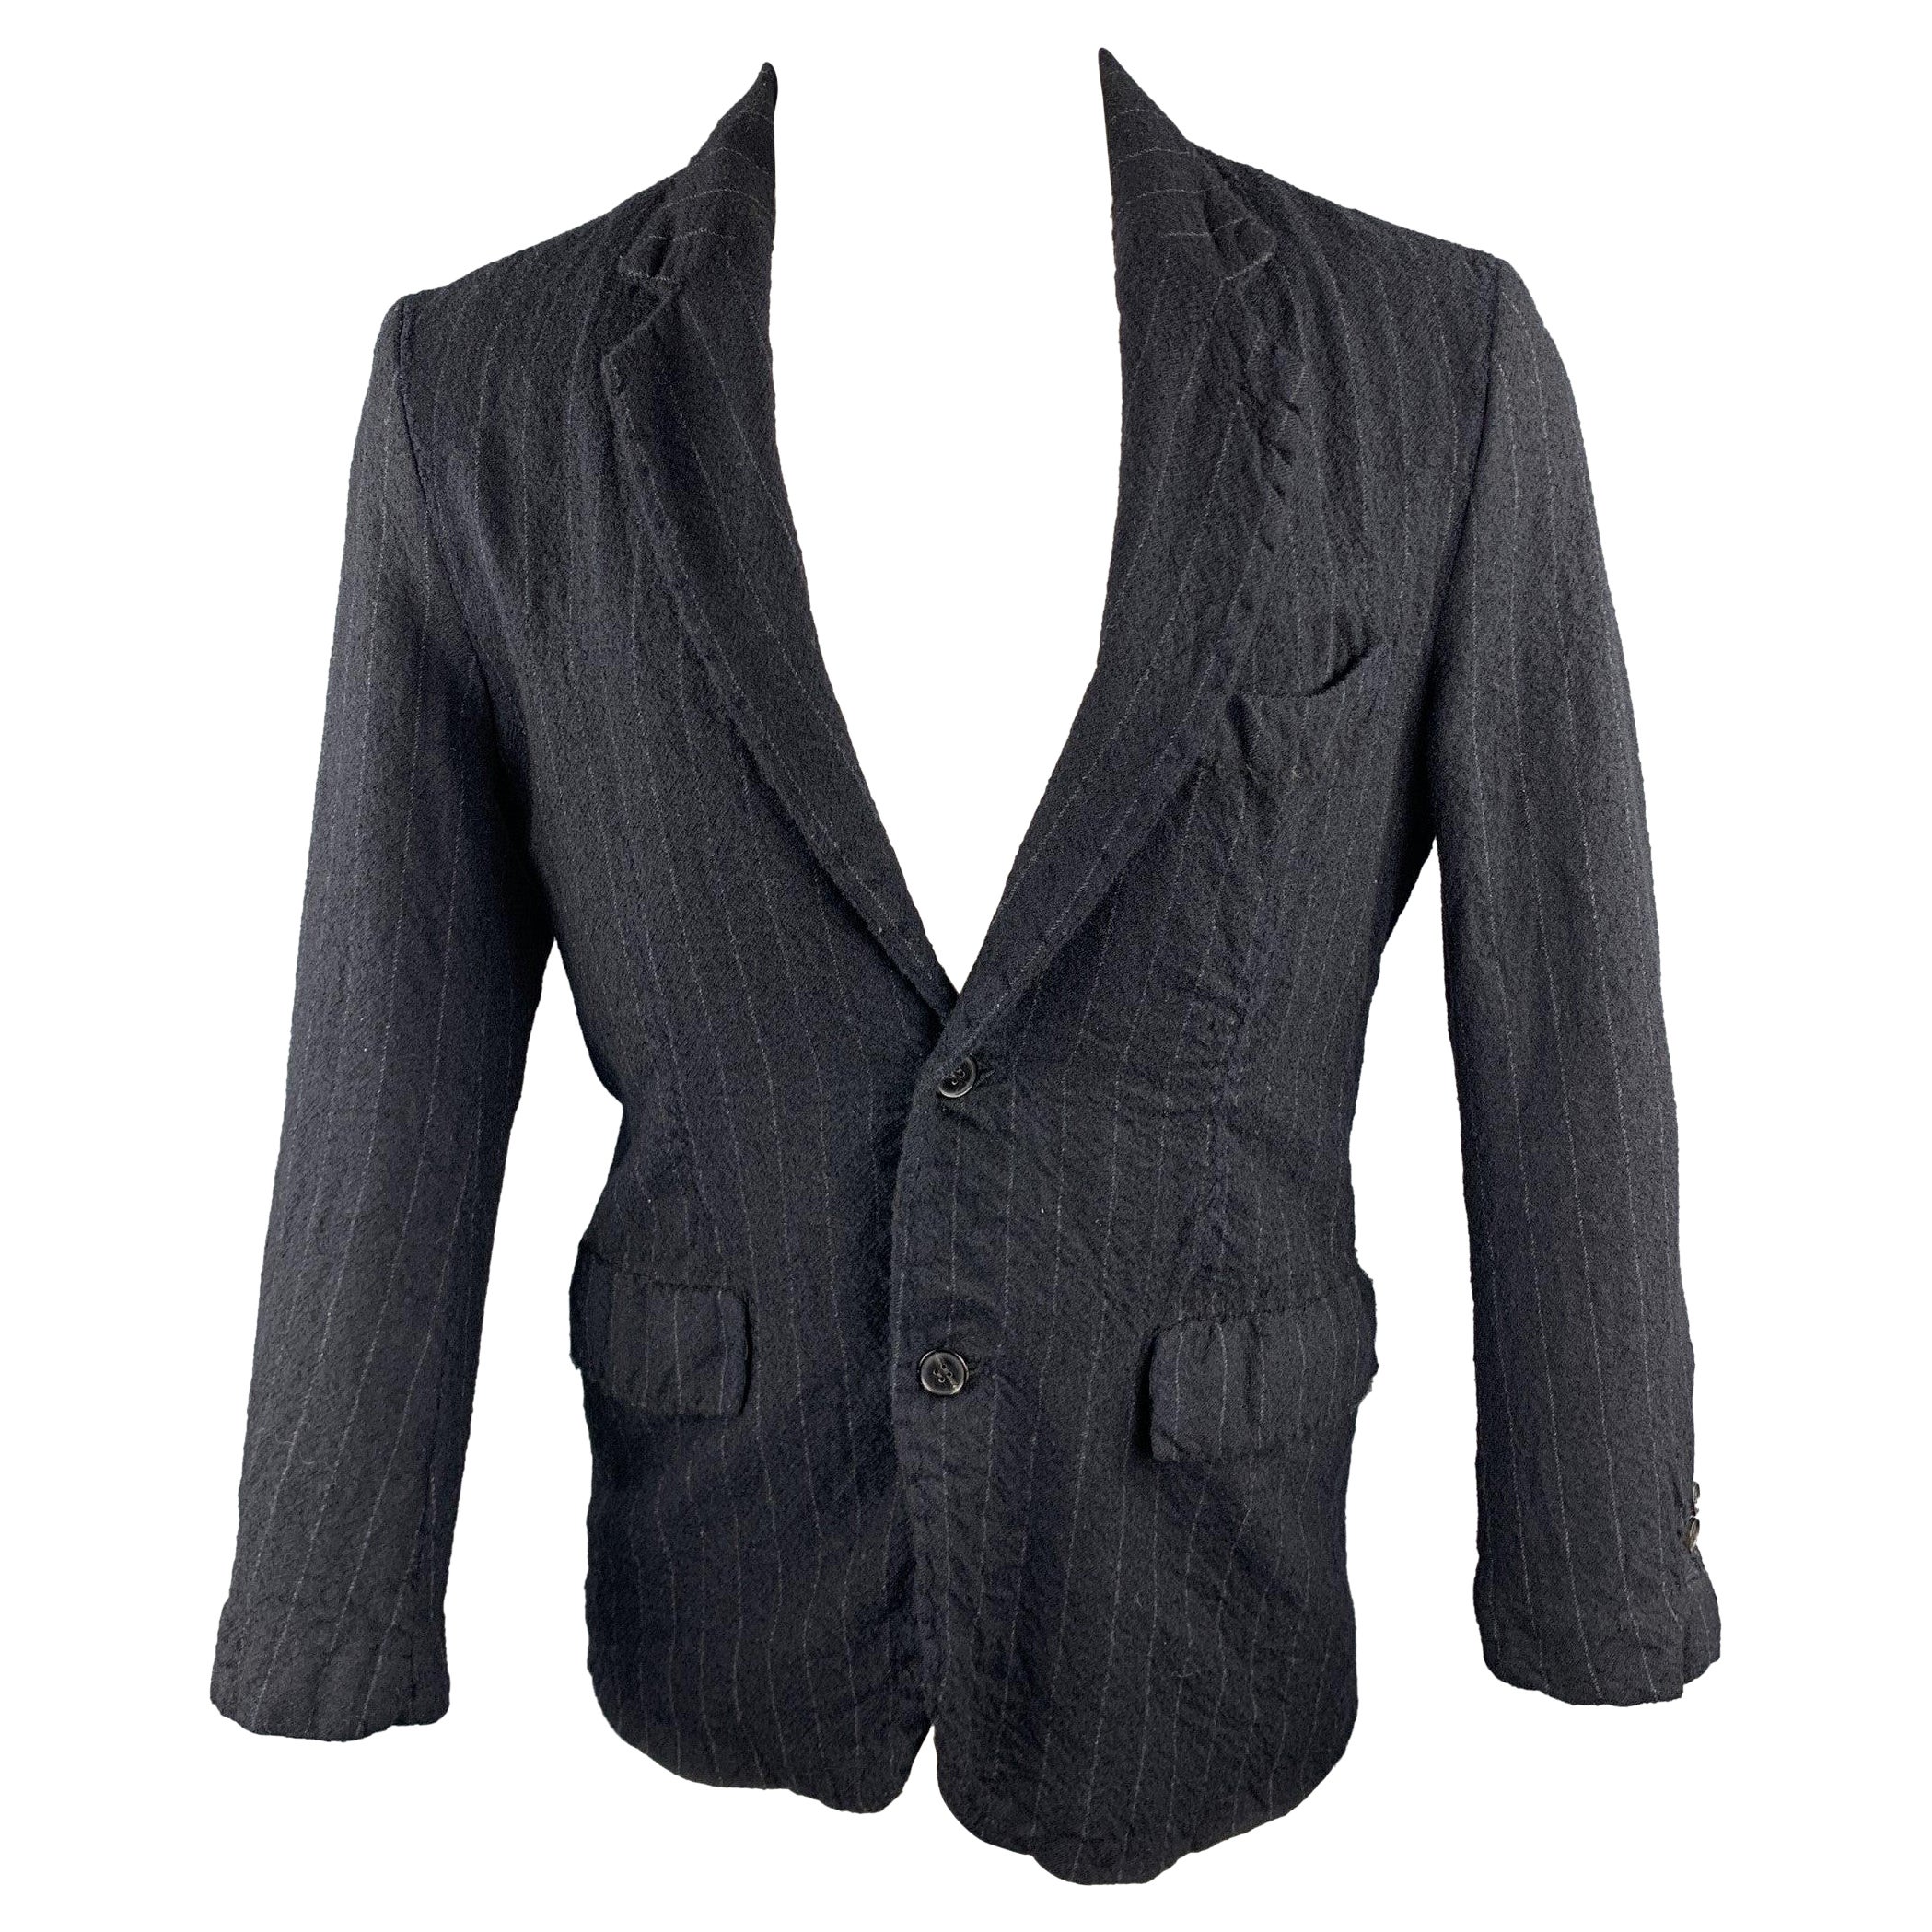 08SIRCUS Size 38 Navy Chalkstripe Wool Notch Lapel Jacket For Sale